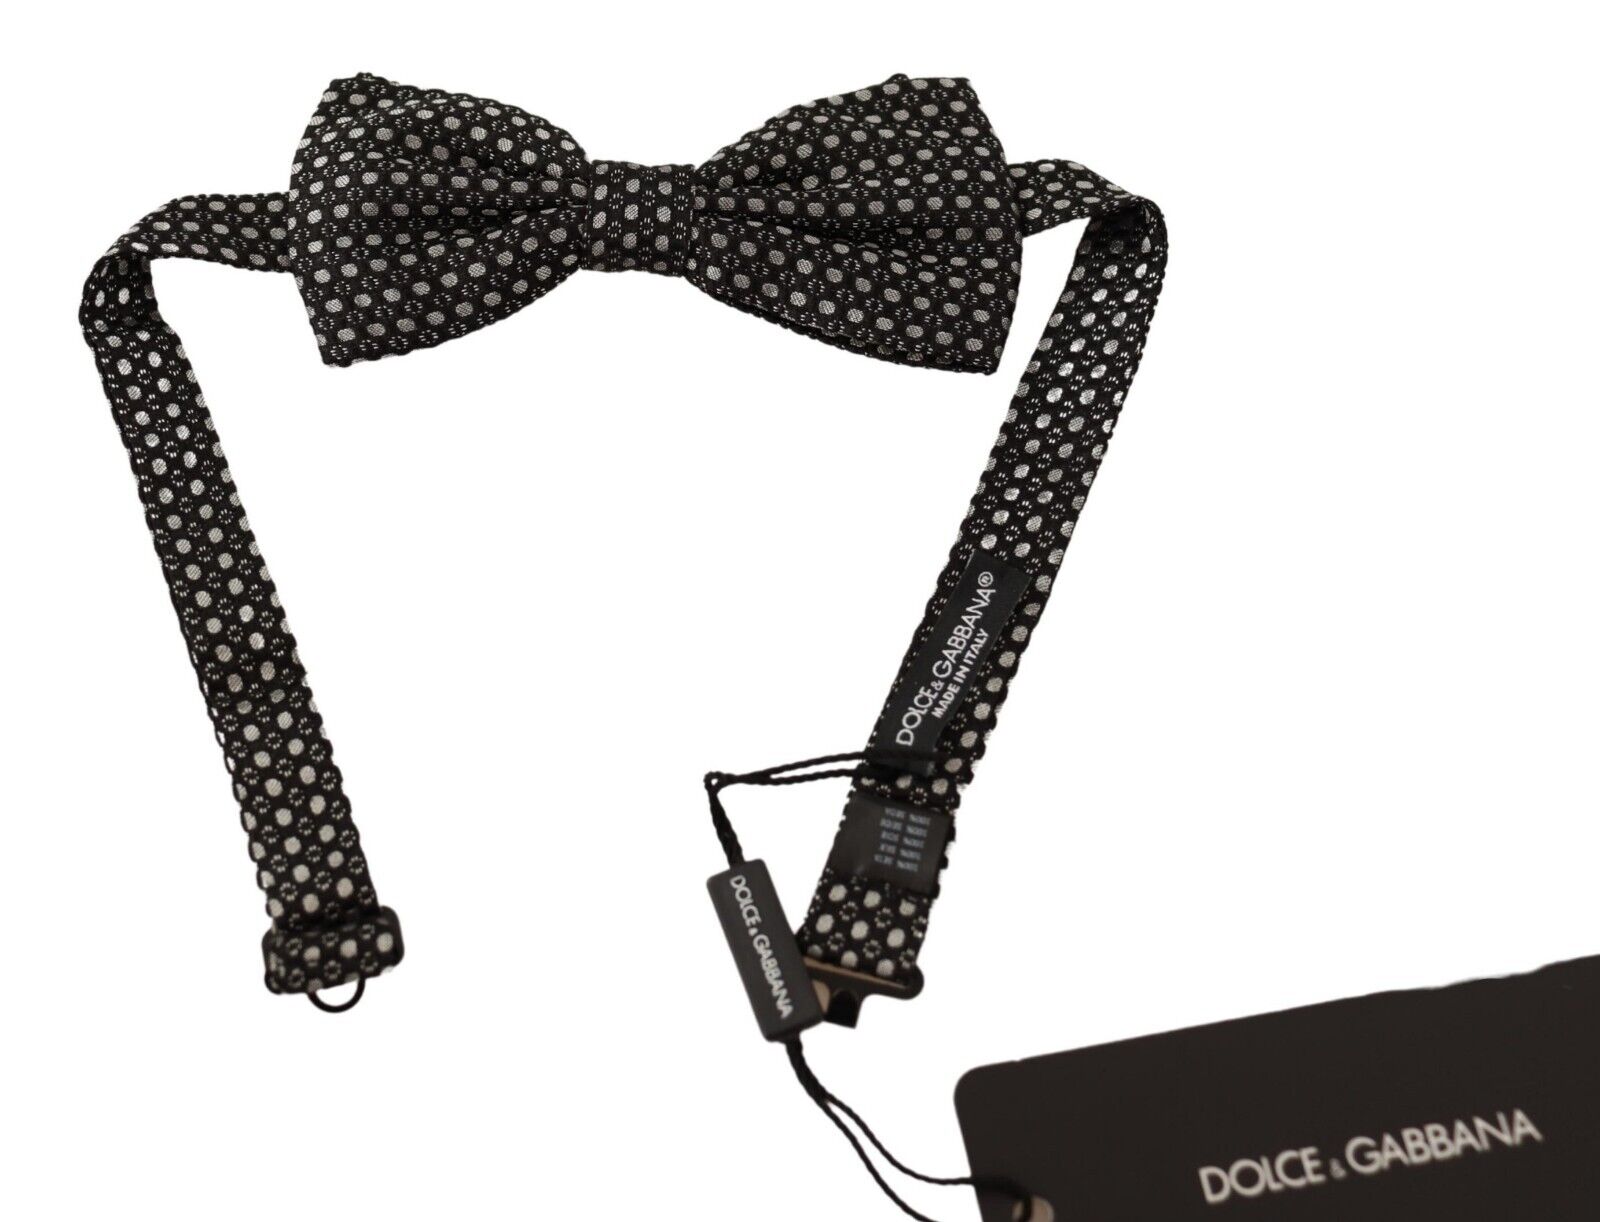 Save 51% Dolce & Gabbana Black Patterned Necktie Papillon Silk Bow Tie for Men Mens Accessories Ties 